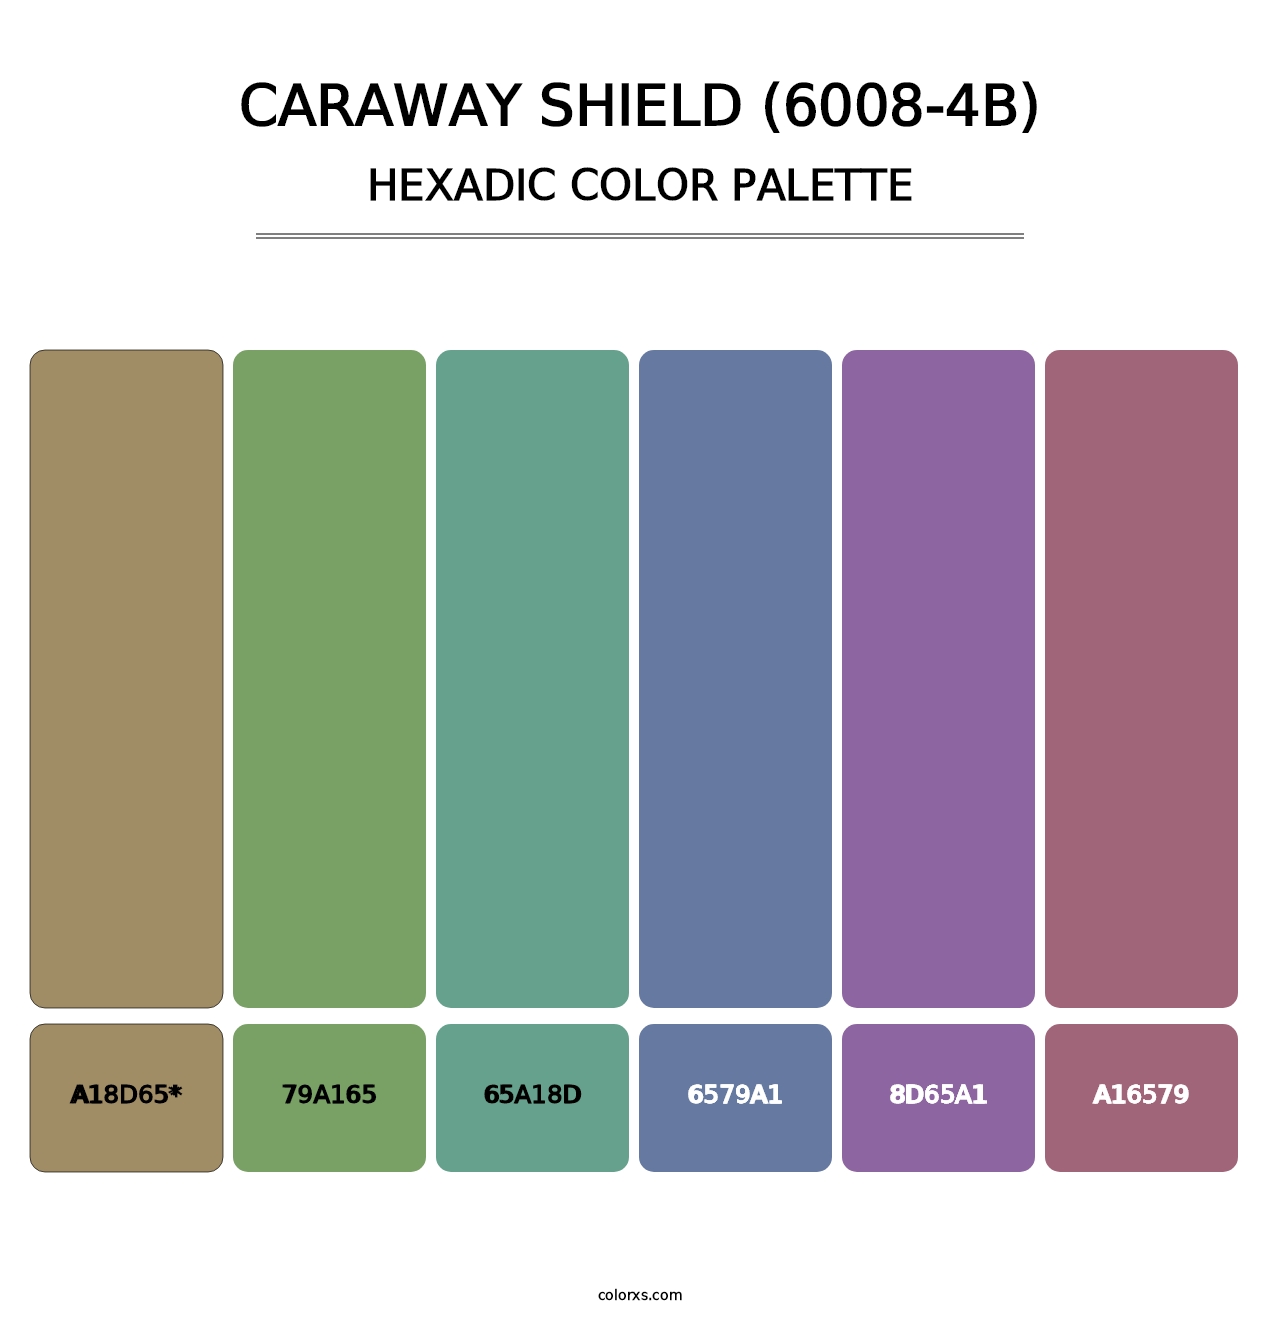 Caraway Shield (6008-4B) - Hexadic Color Palette